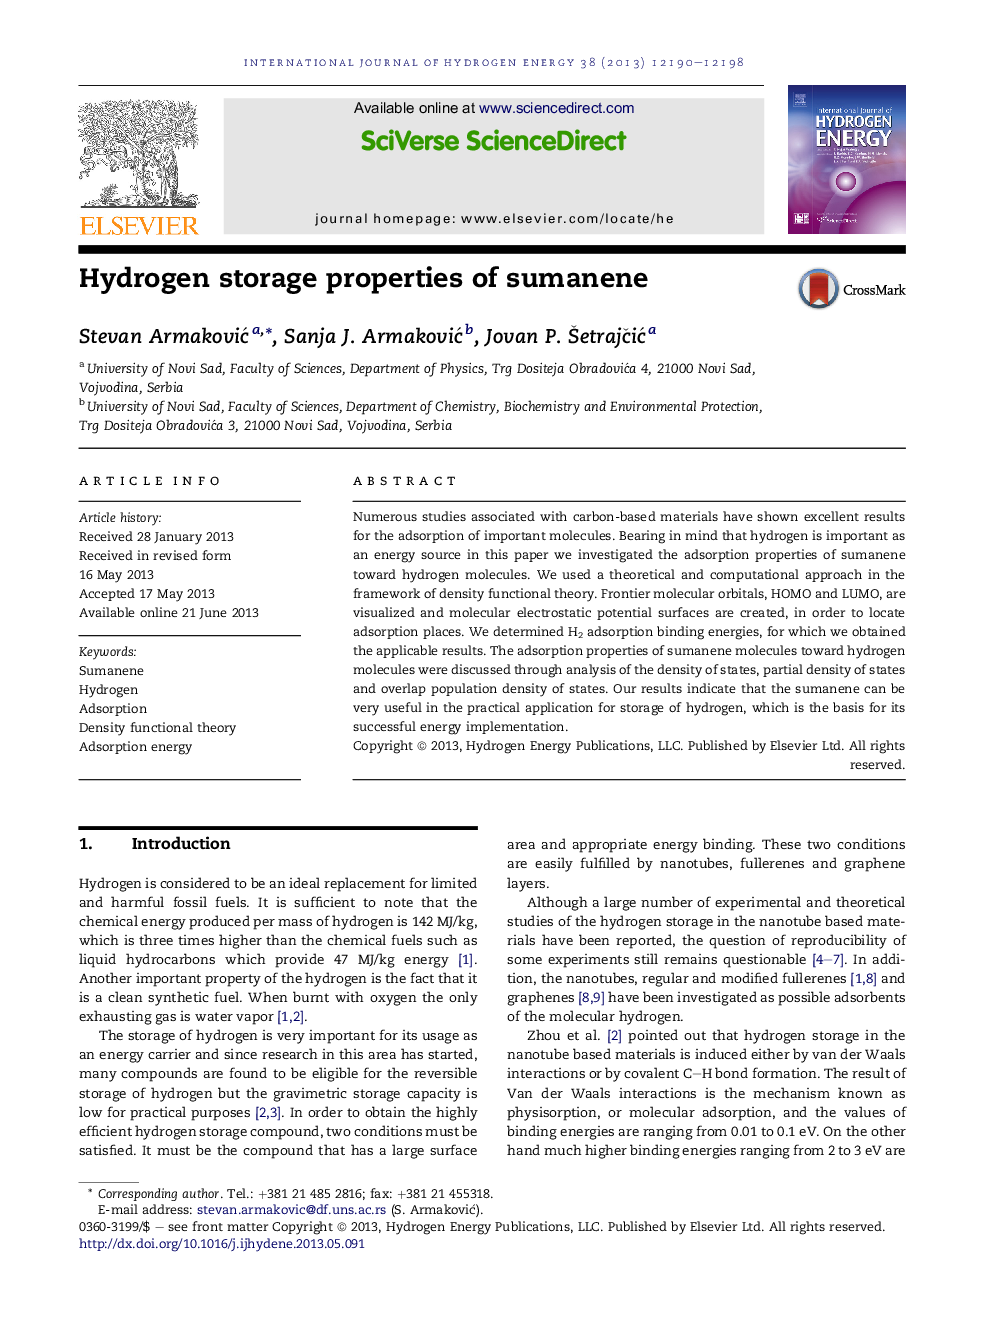 Hydrogen storage properties of sumanene